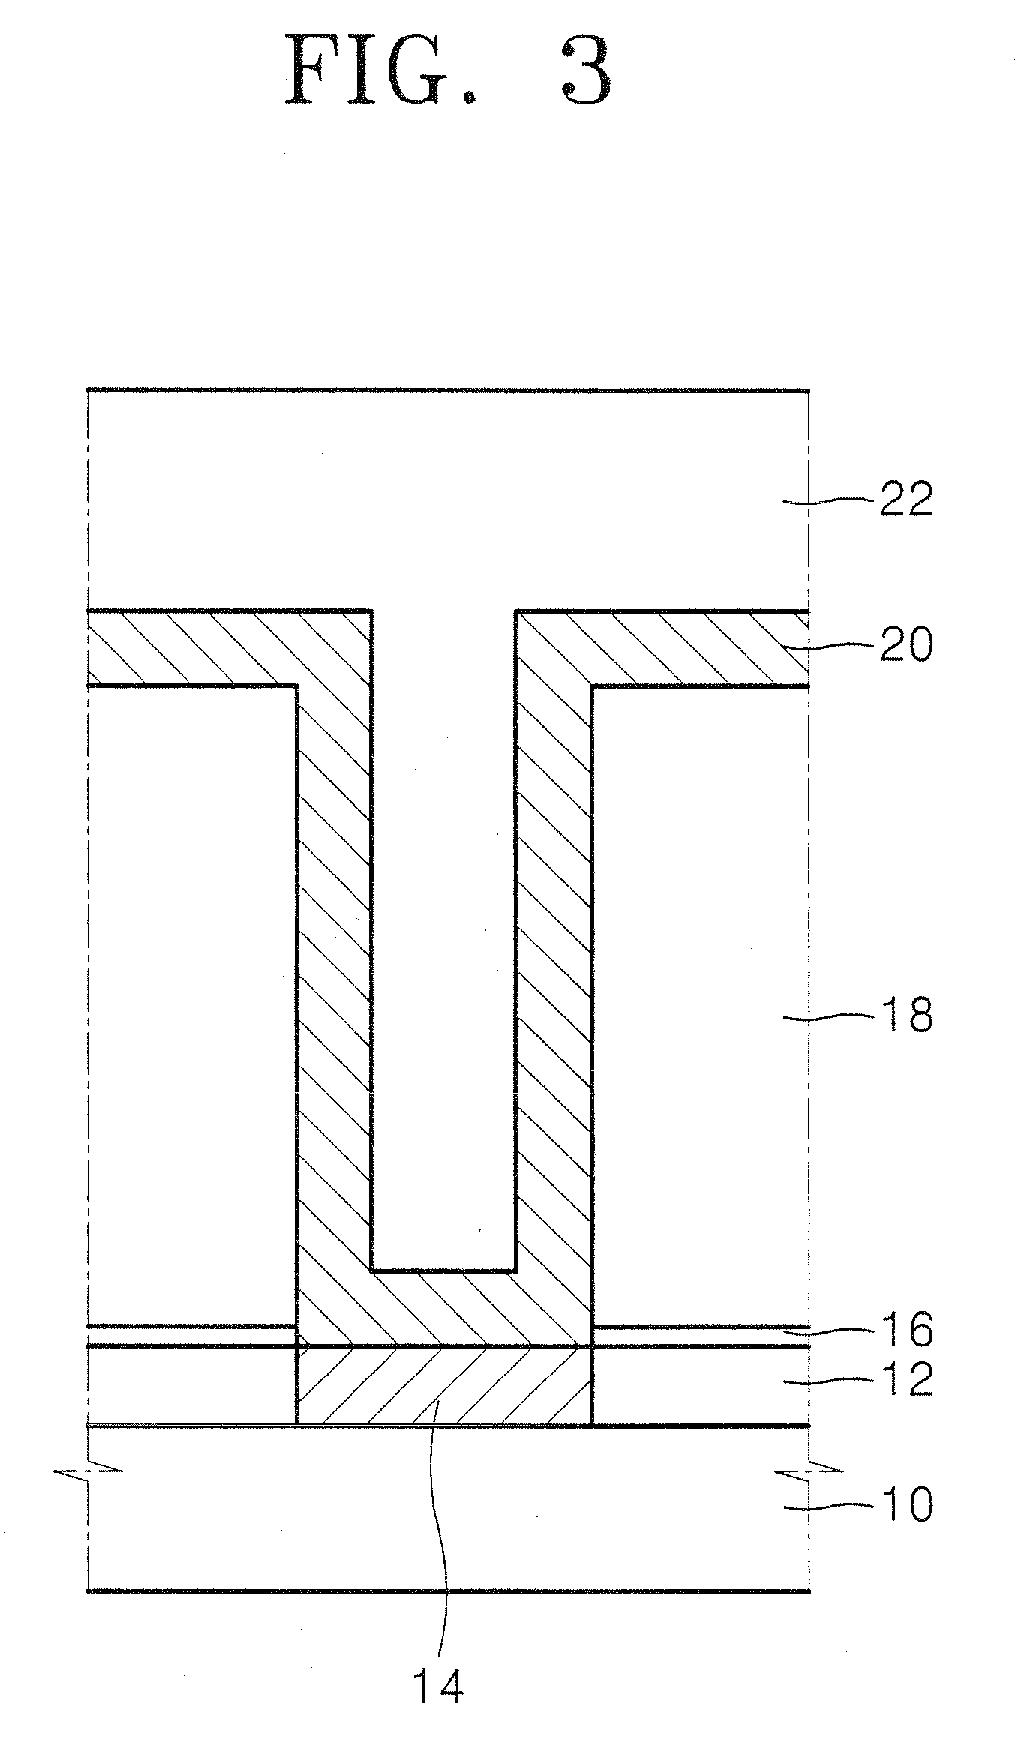 Method of fabricating metal-insulator-metal capacitor